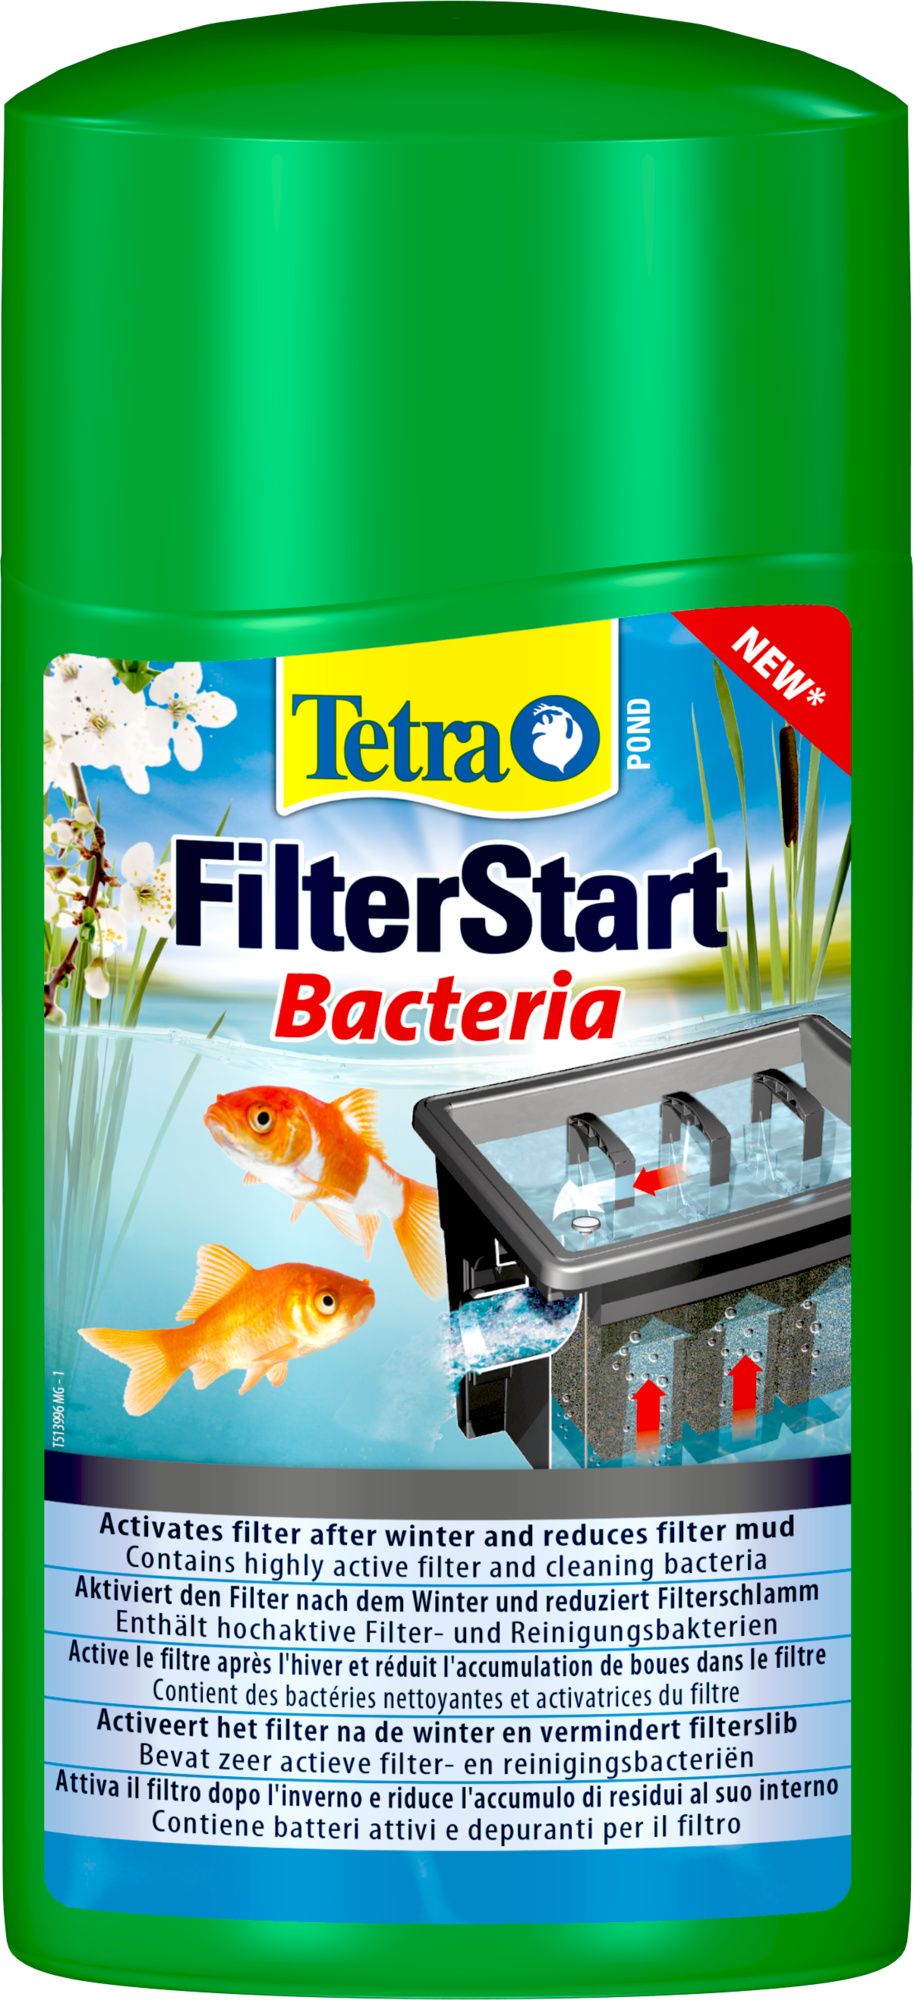 Tetra Pond FilterStart [1l] - Filtrarea bacteriilor vii